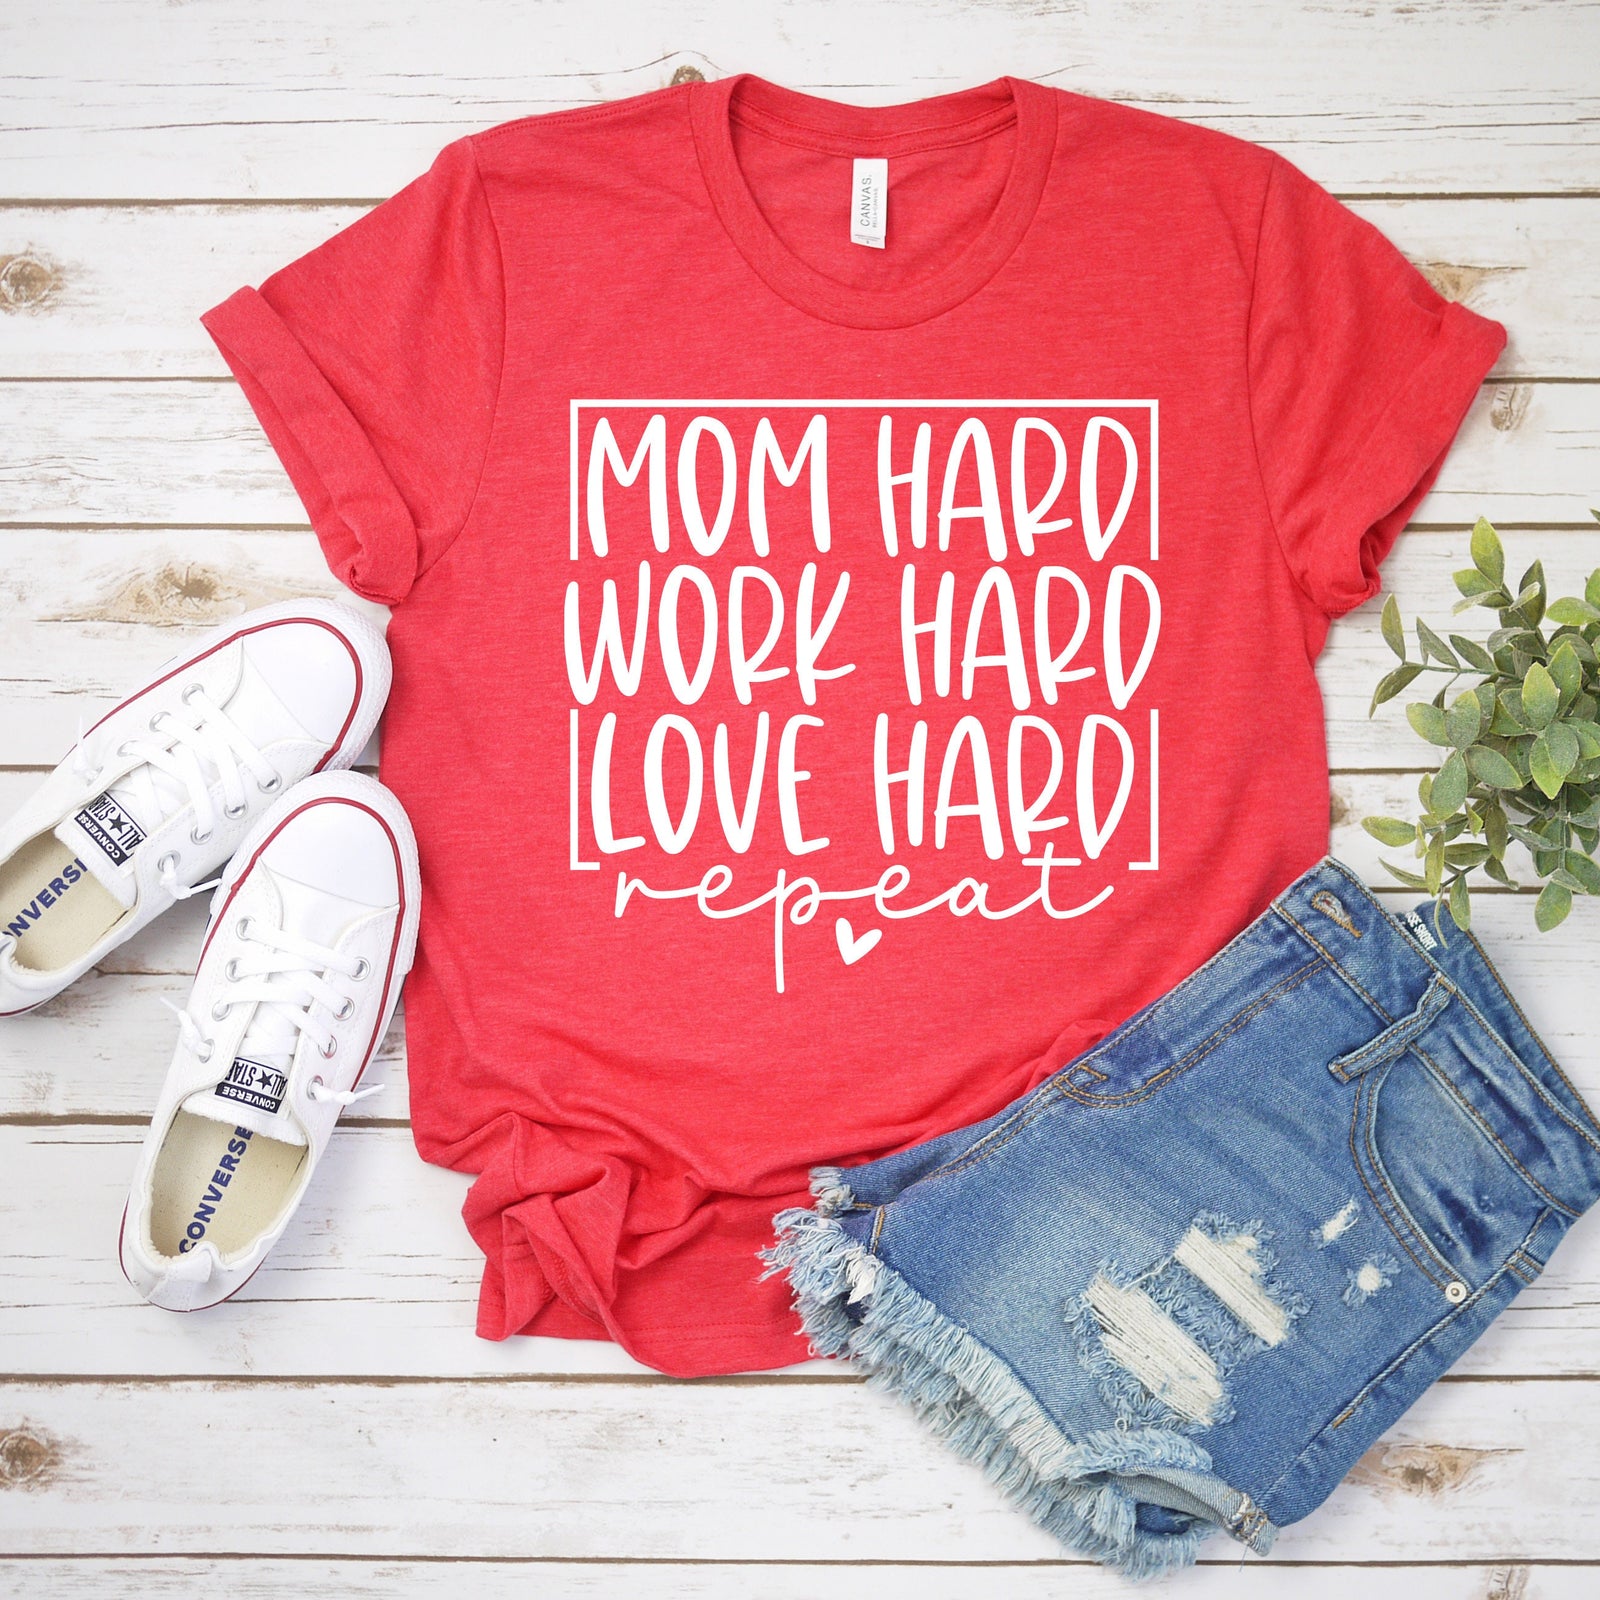 Mom Hard Work Hard Love Hard Repeat Adult Unisex T Shirt -Mother's Day Gift Idea  - Mom tee